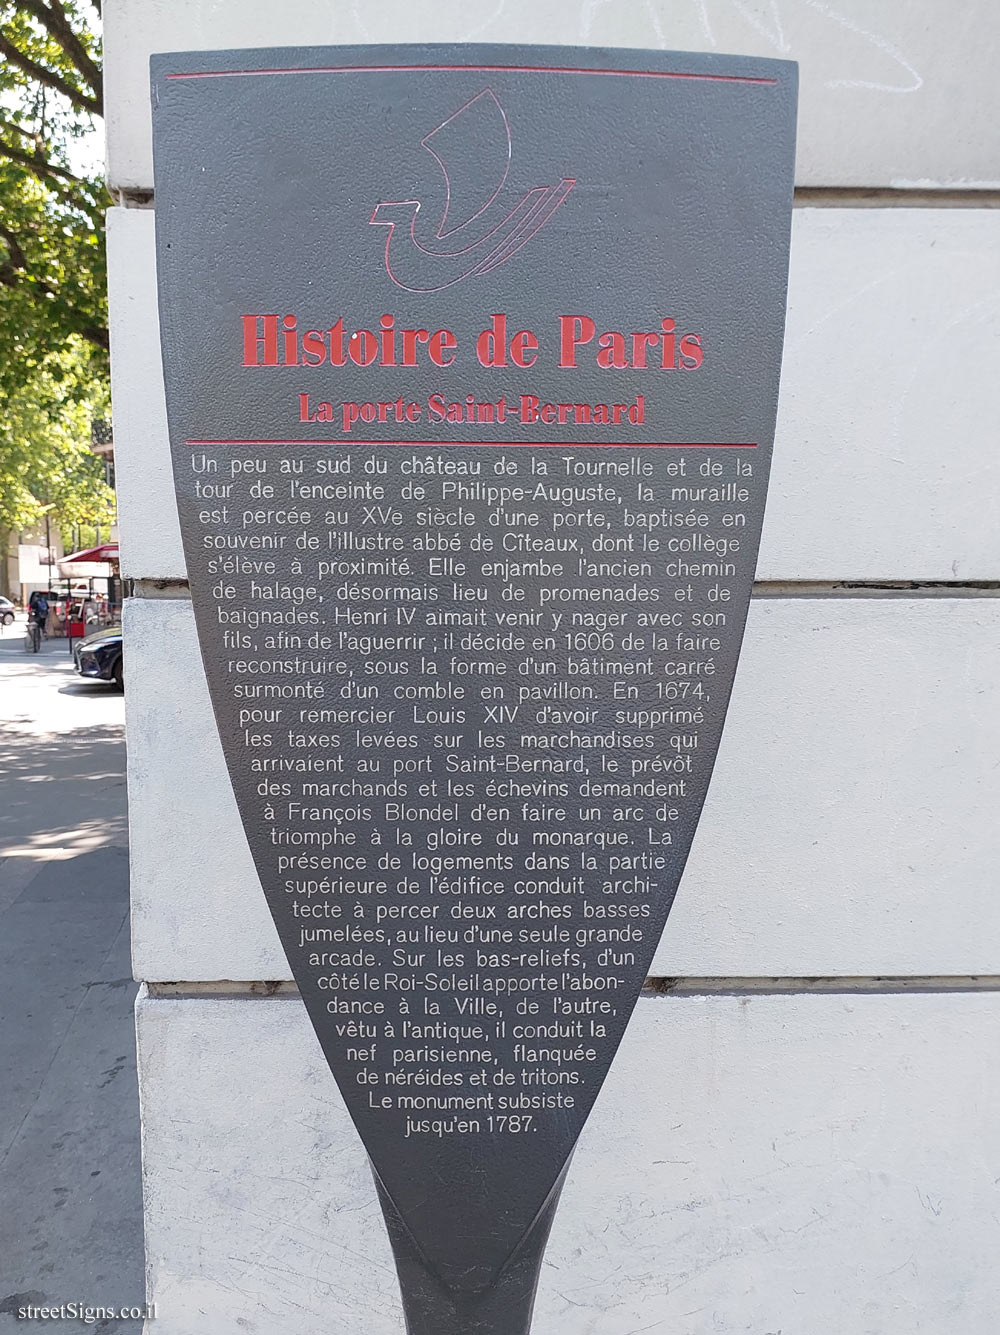 Paris - History of Paris - The Saint-Bernard gate